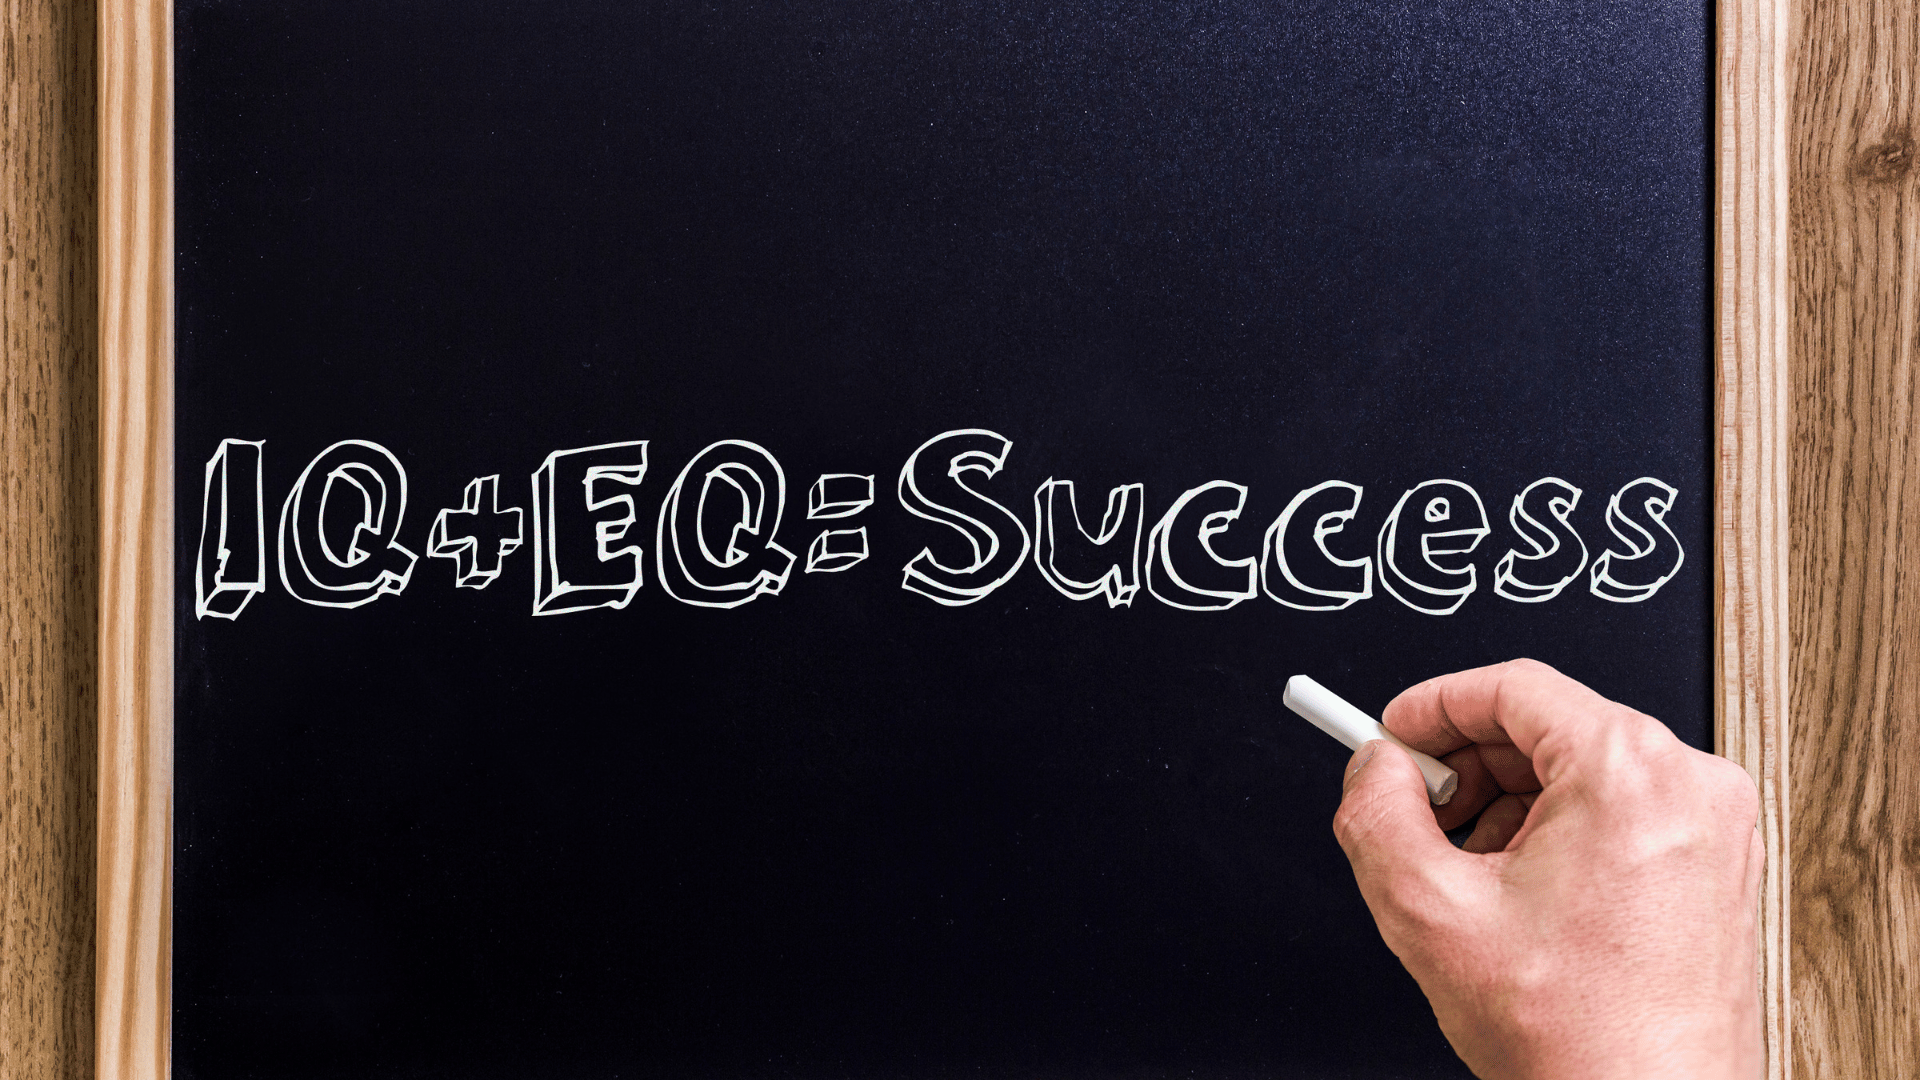 IQ + EQ = Success 